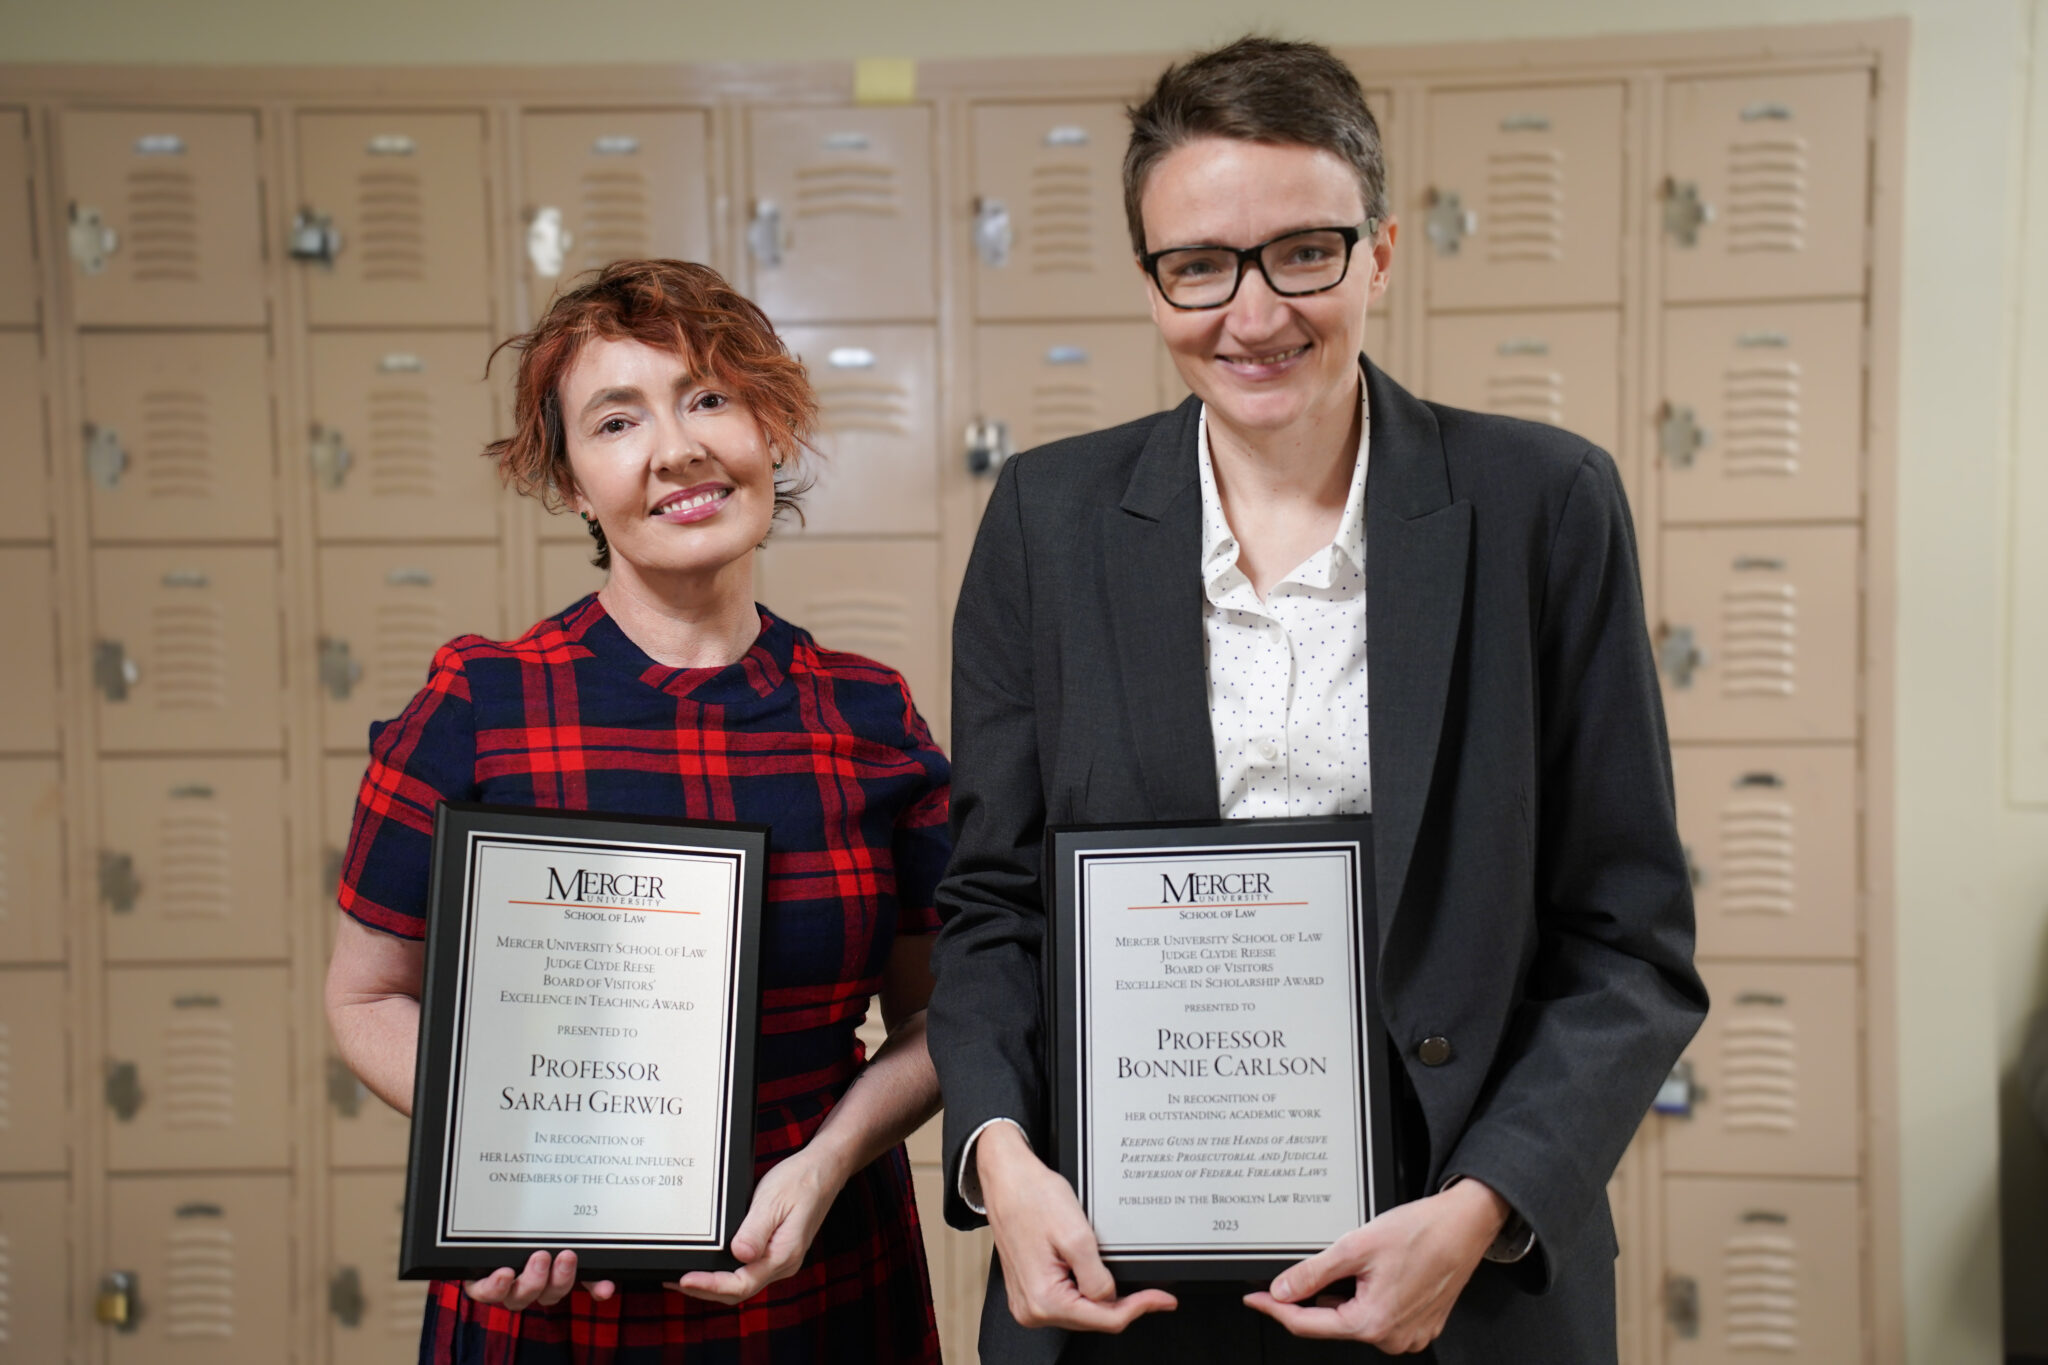 Professor Sarah Gerwig and Professor Bonnie Carlson holding Faculty Award plaques